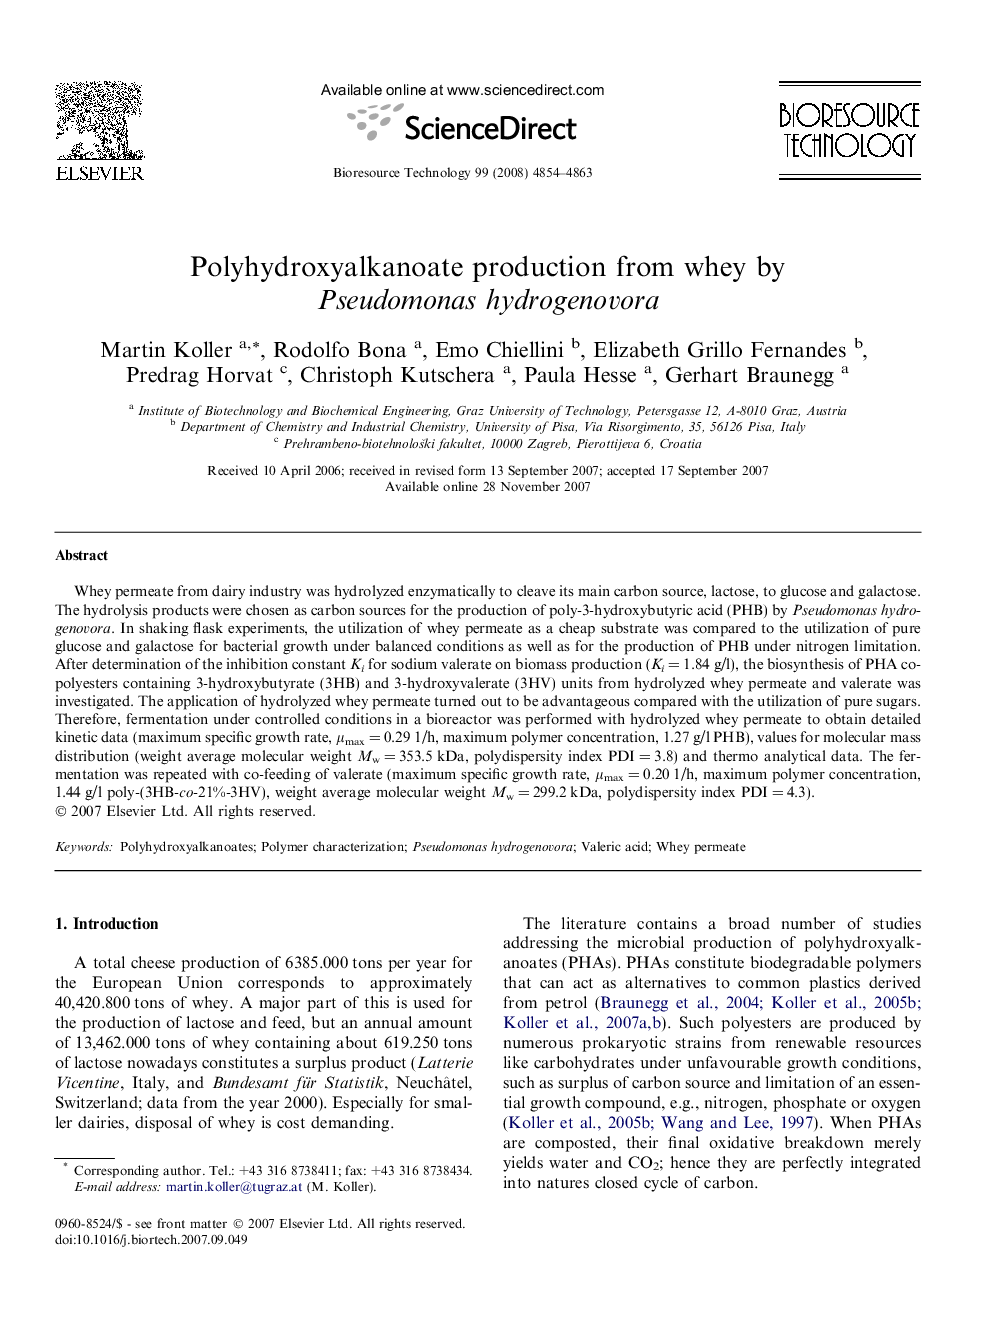 Polyhydroxyalkanoate production from whey by Pseudomonas hydrogenovora